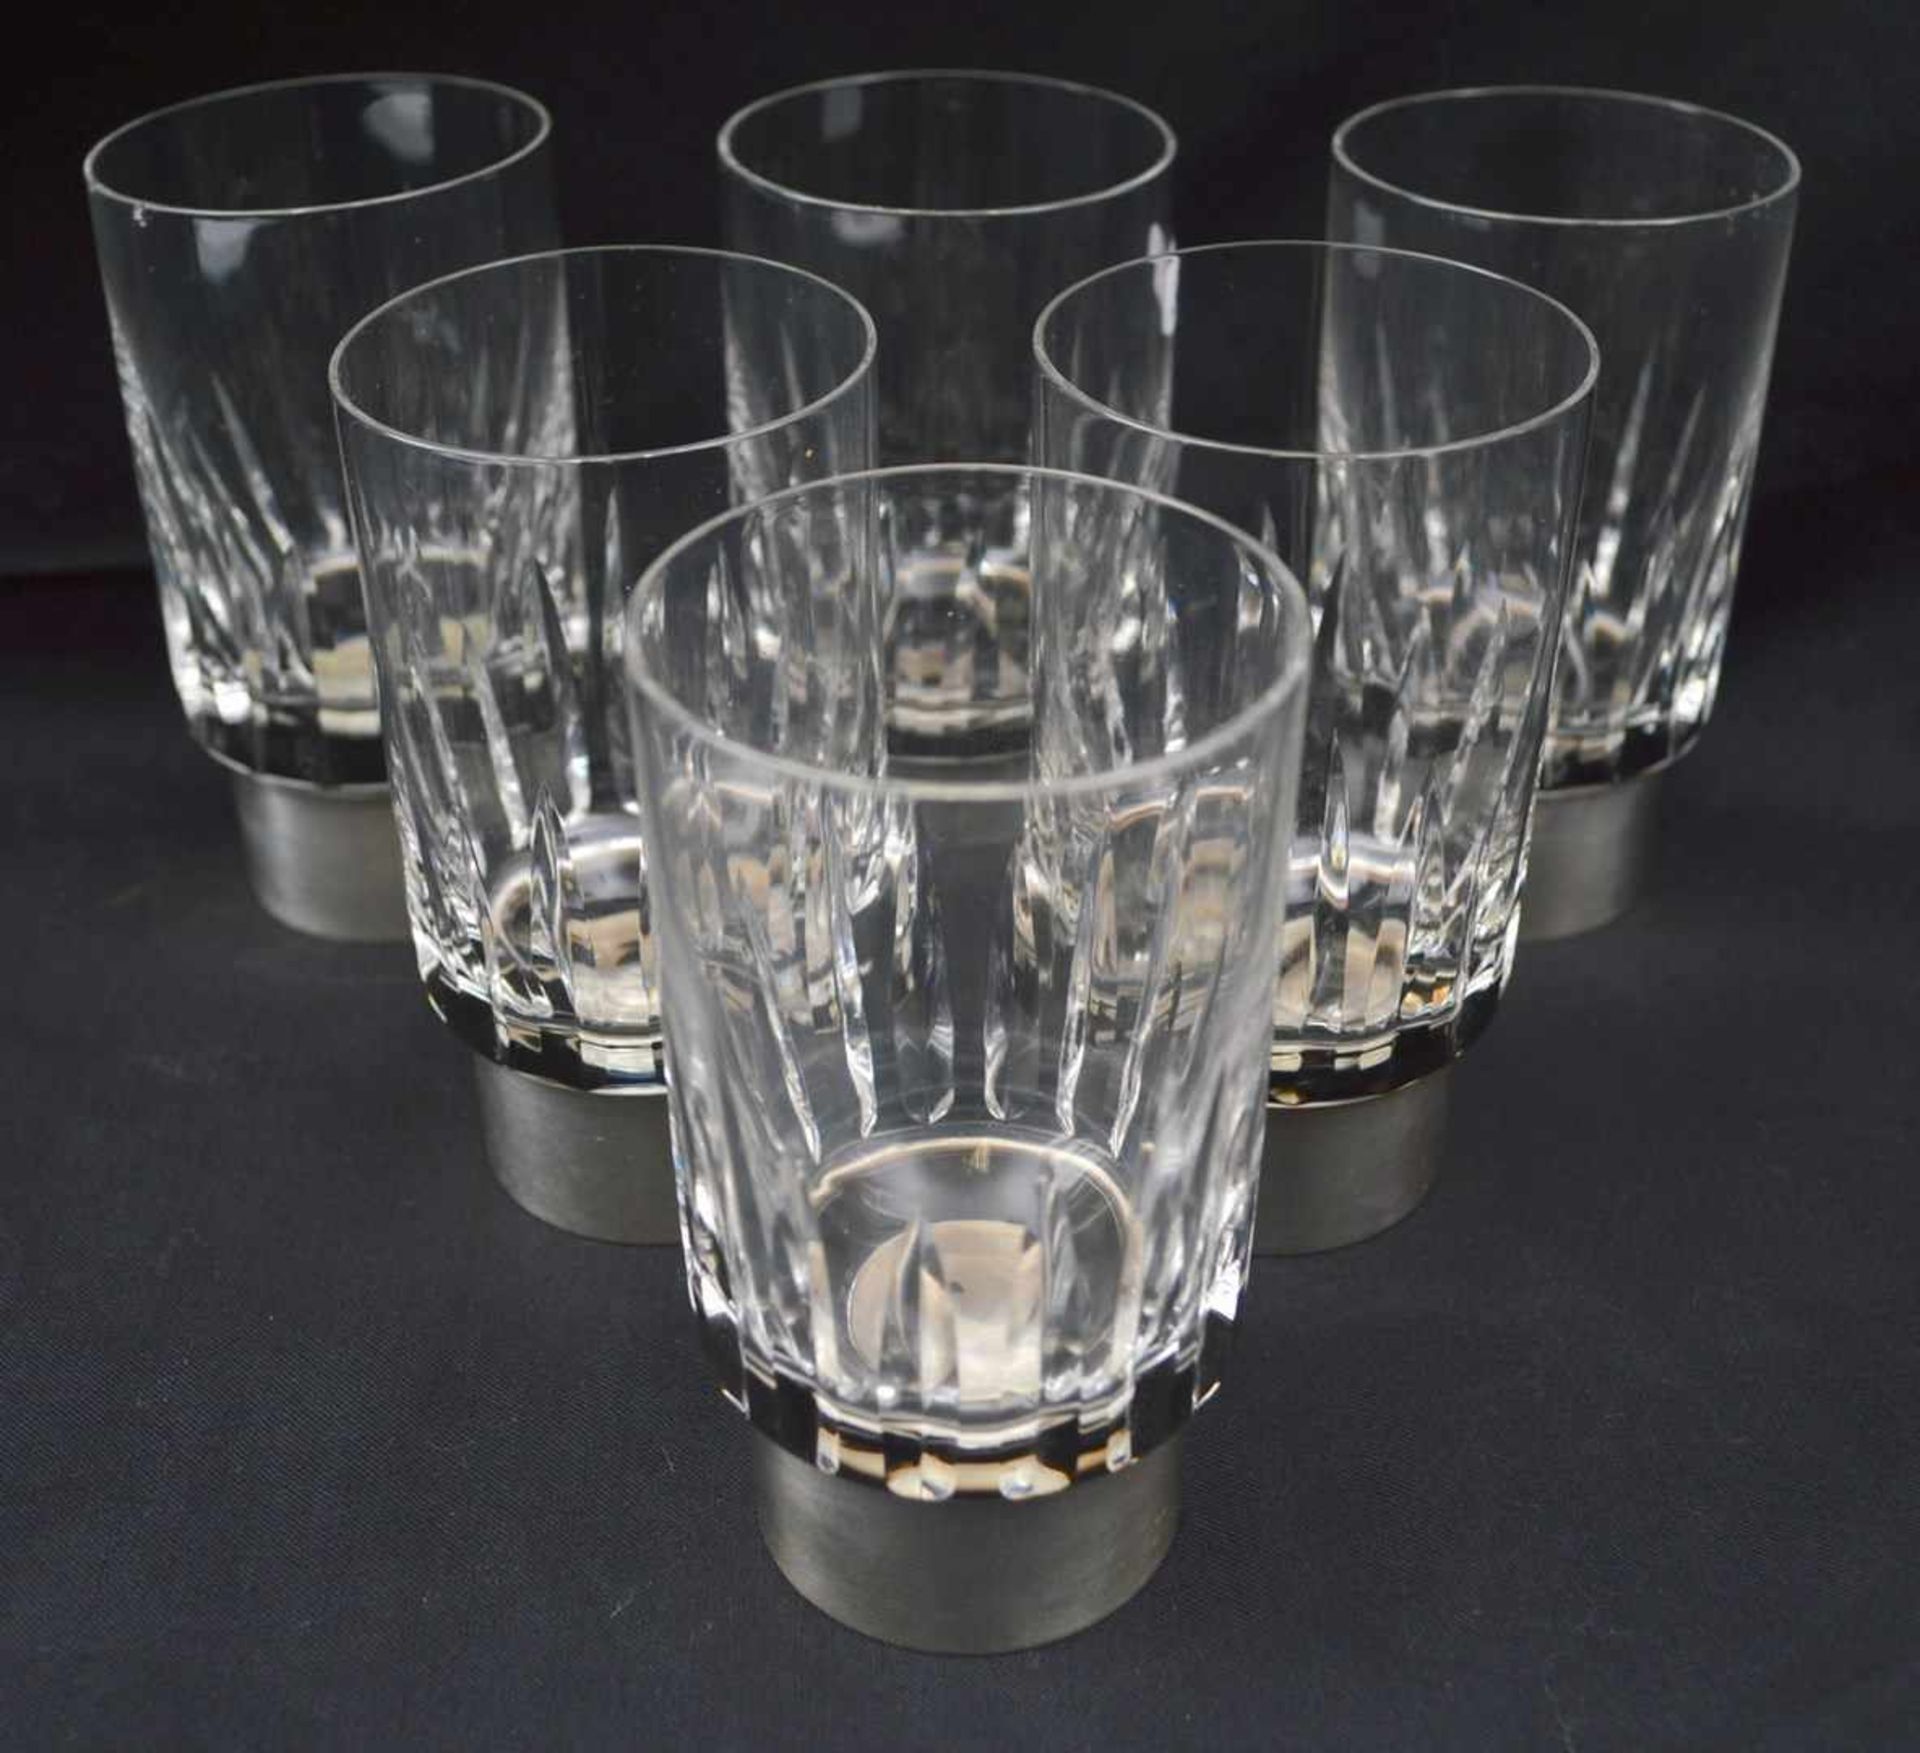 Sechs Wassergläser farbl. Glas, geschliffen, runder 925er Sterlingsilberfuß, H 11 cm